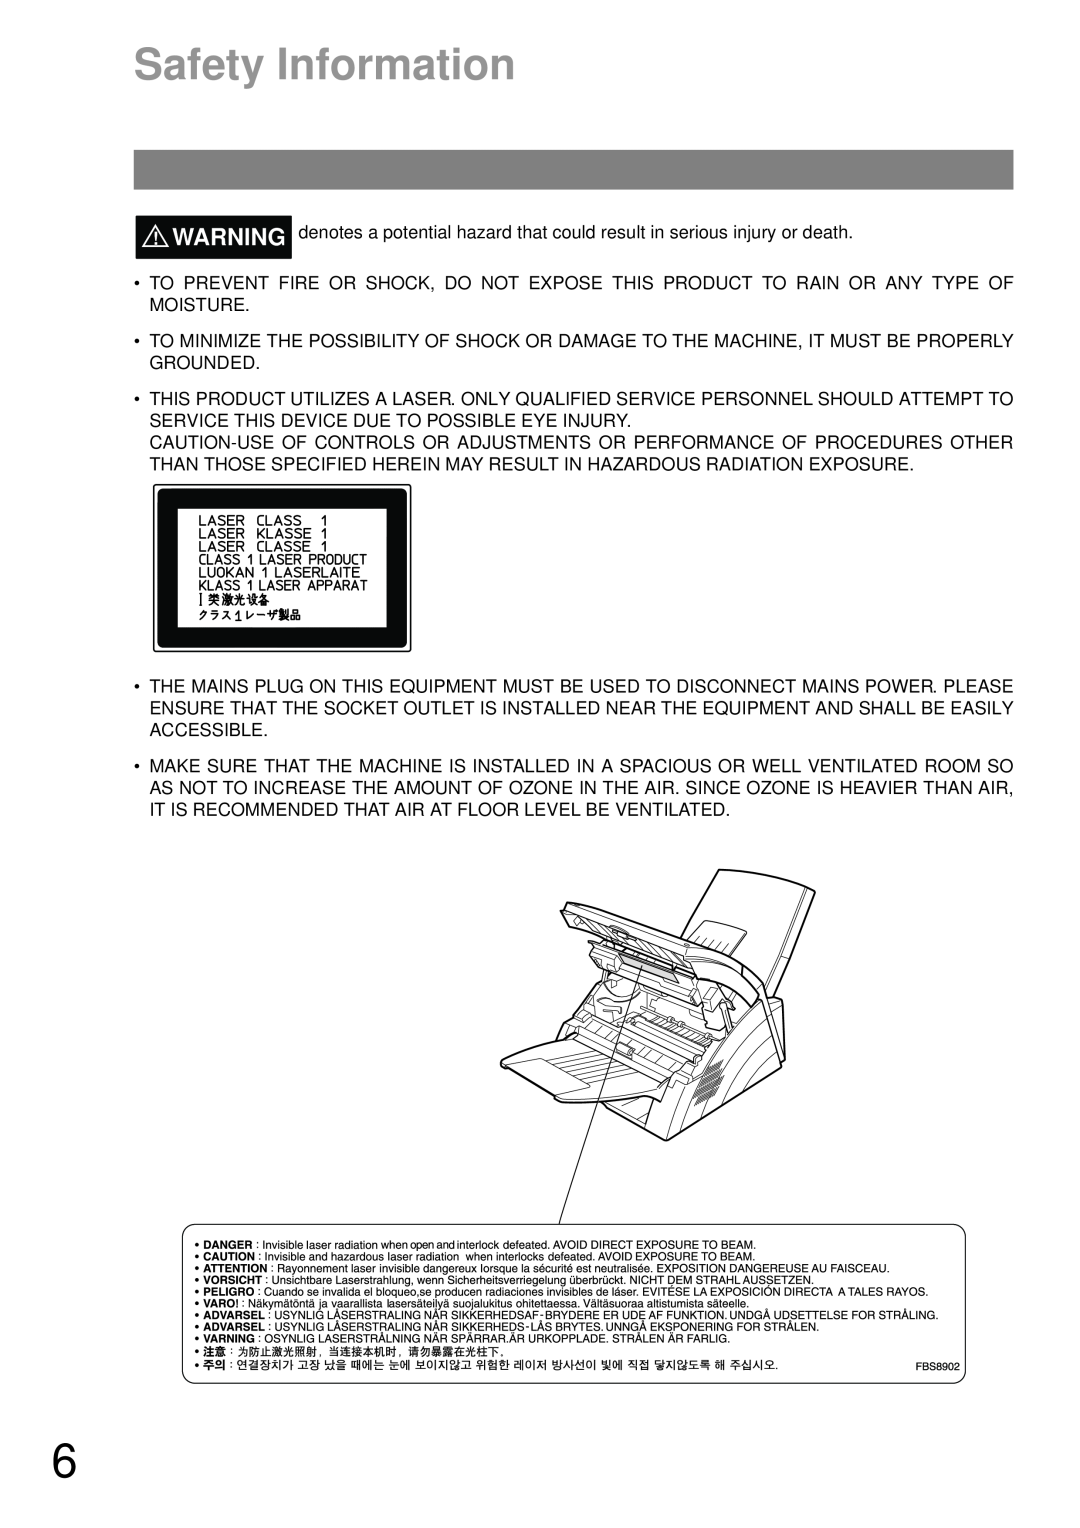 Castelle UF-490 appendix Safety Information 